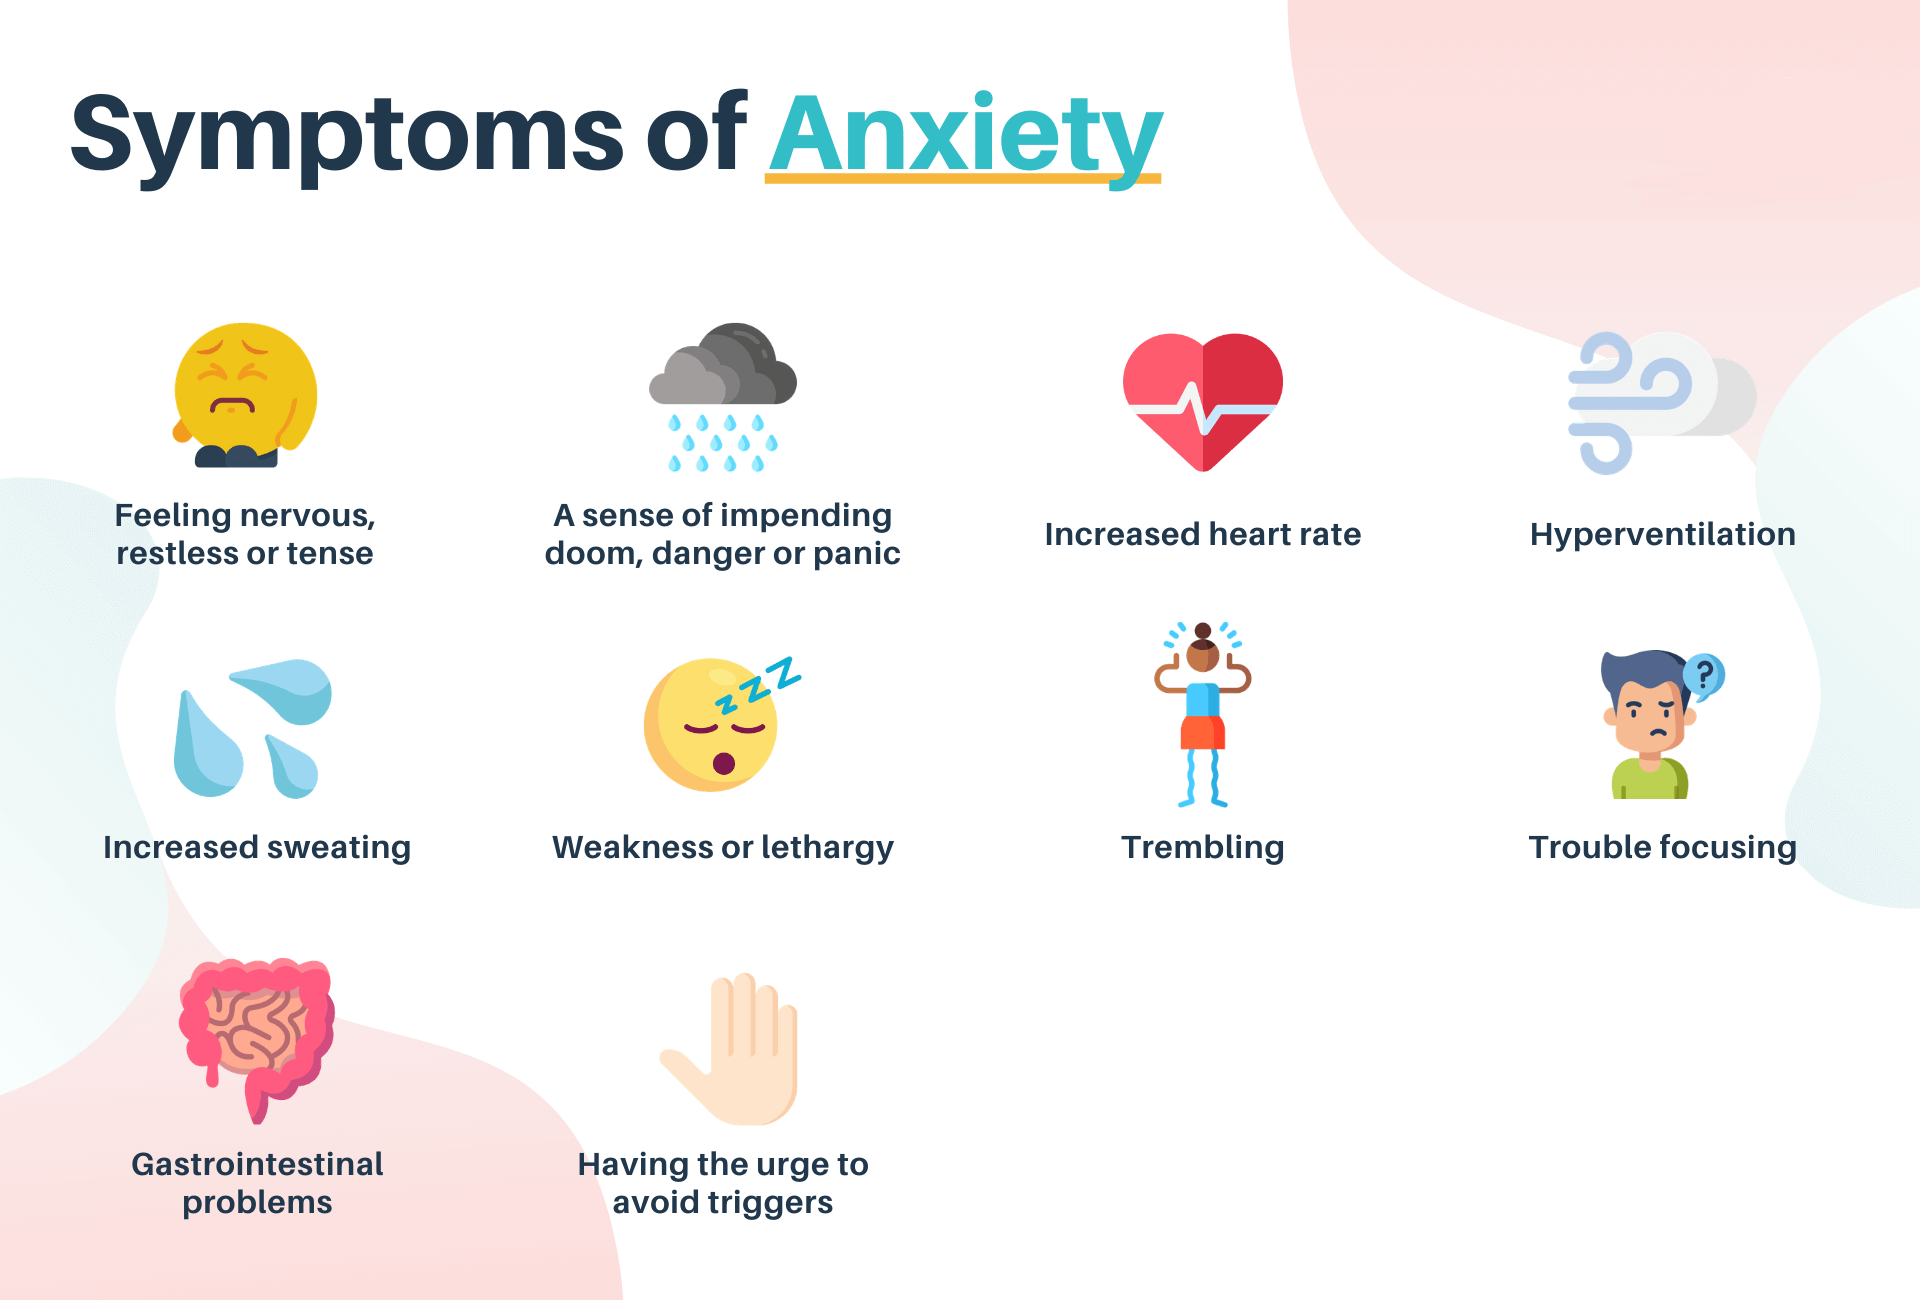 Depression vs Anxiety